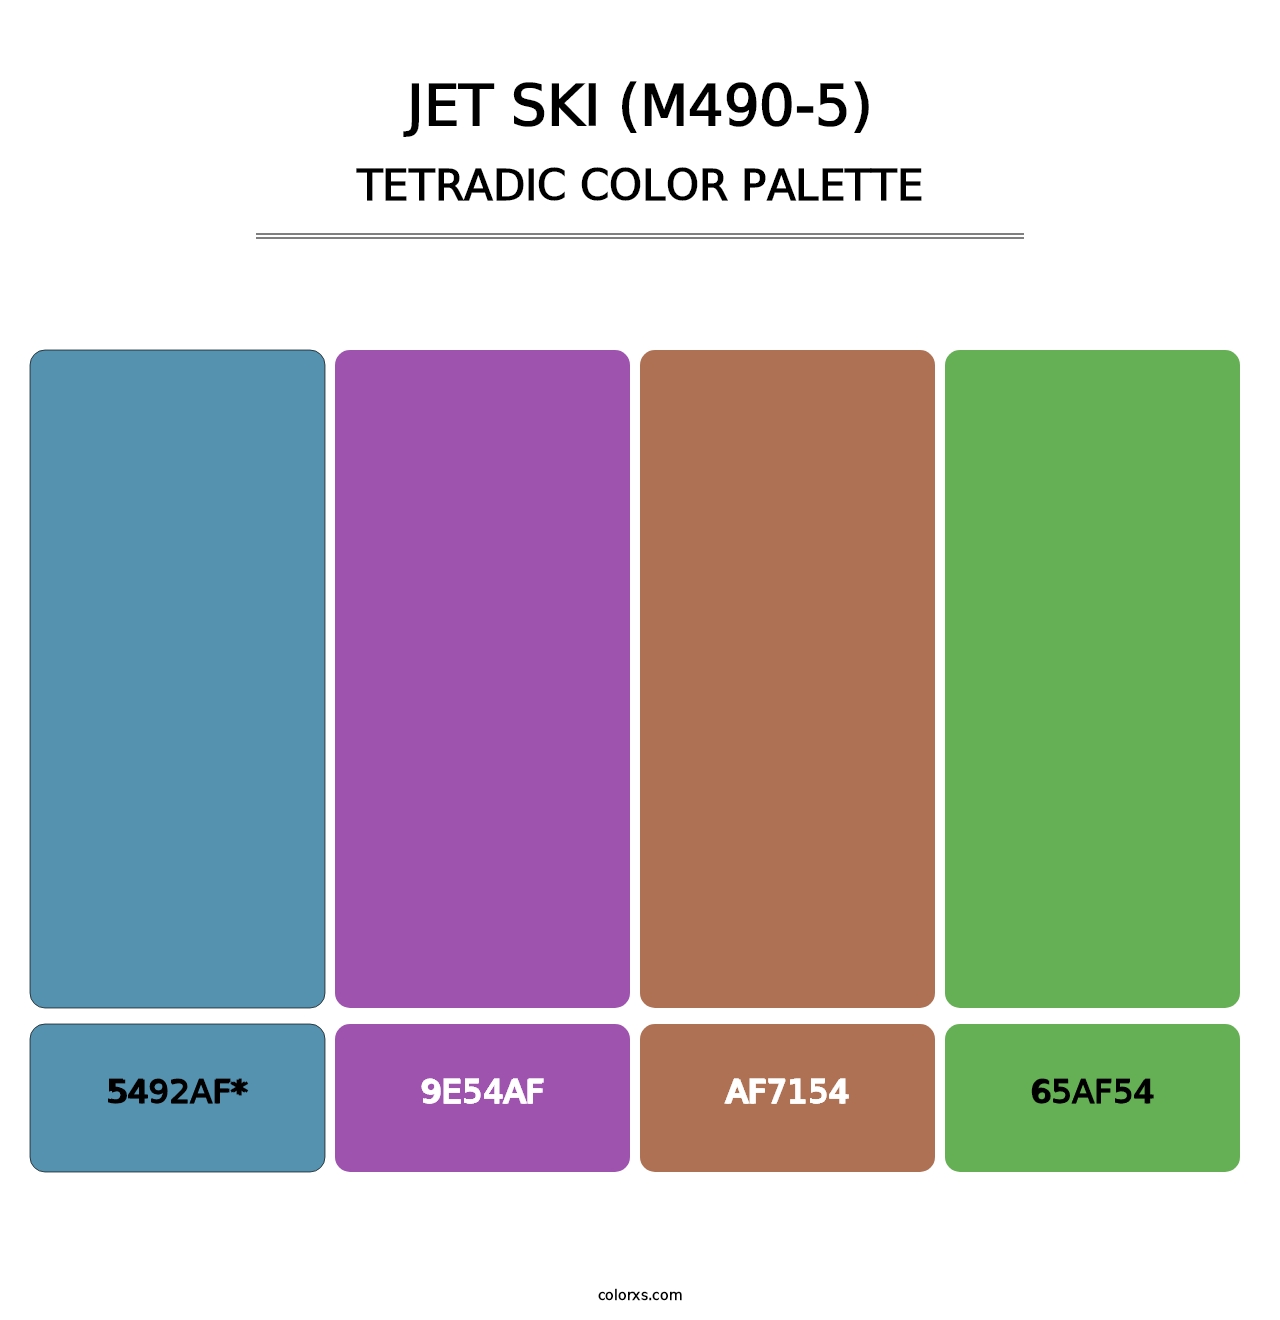 Jet Ski (M490-5) - Tetradic Color Palette